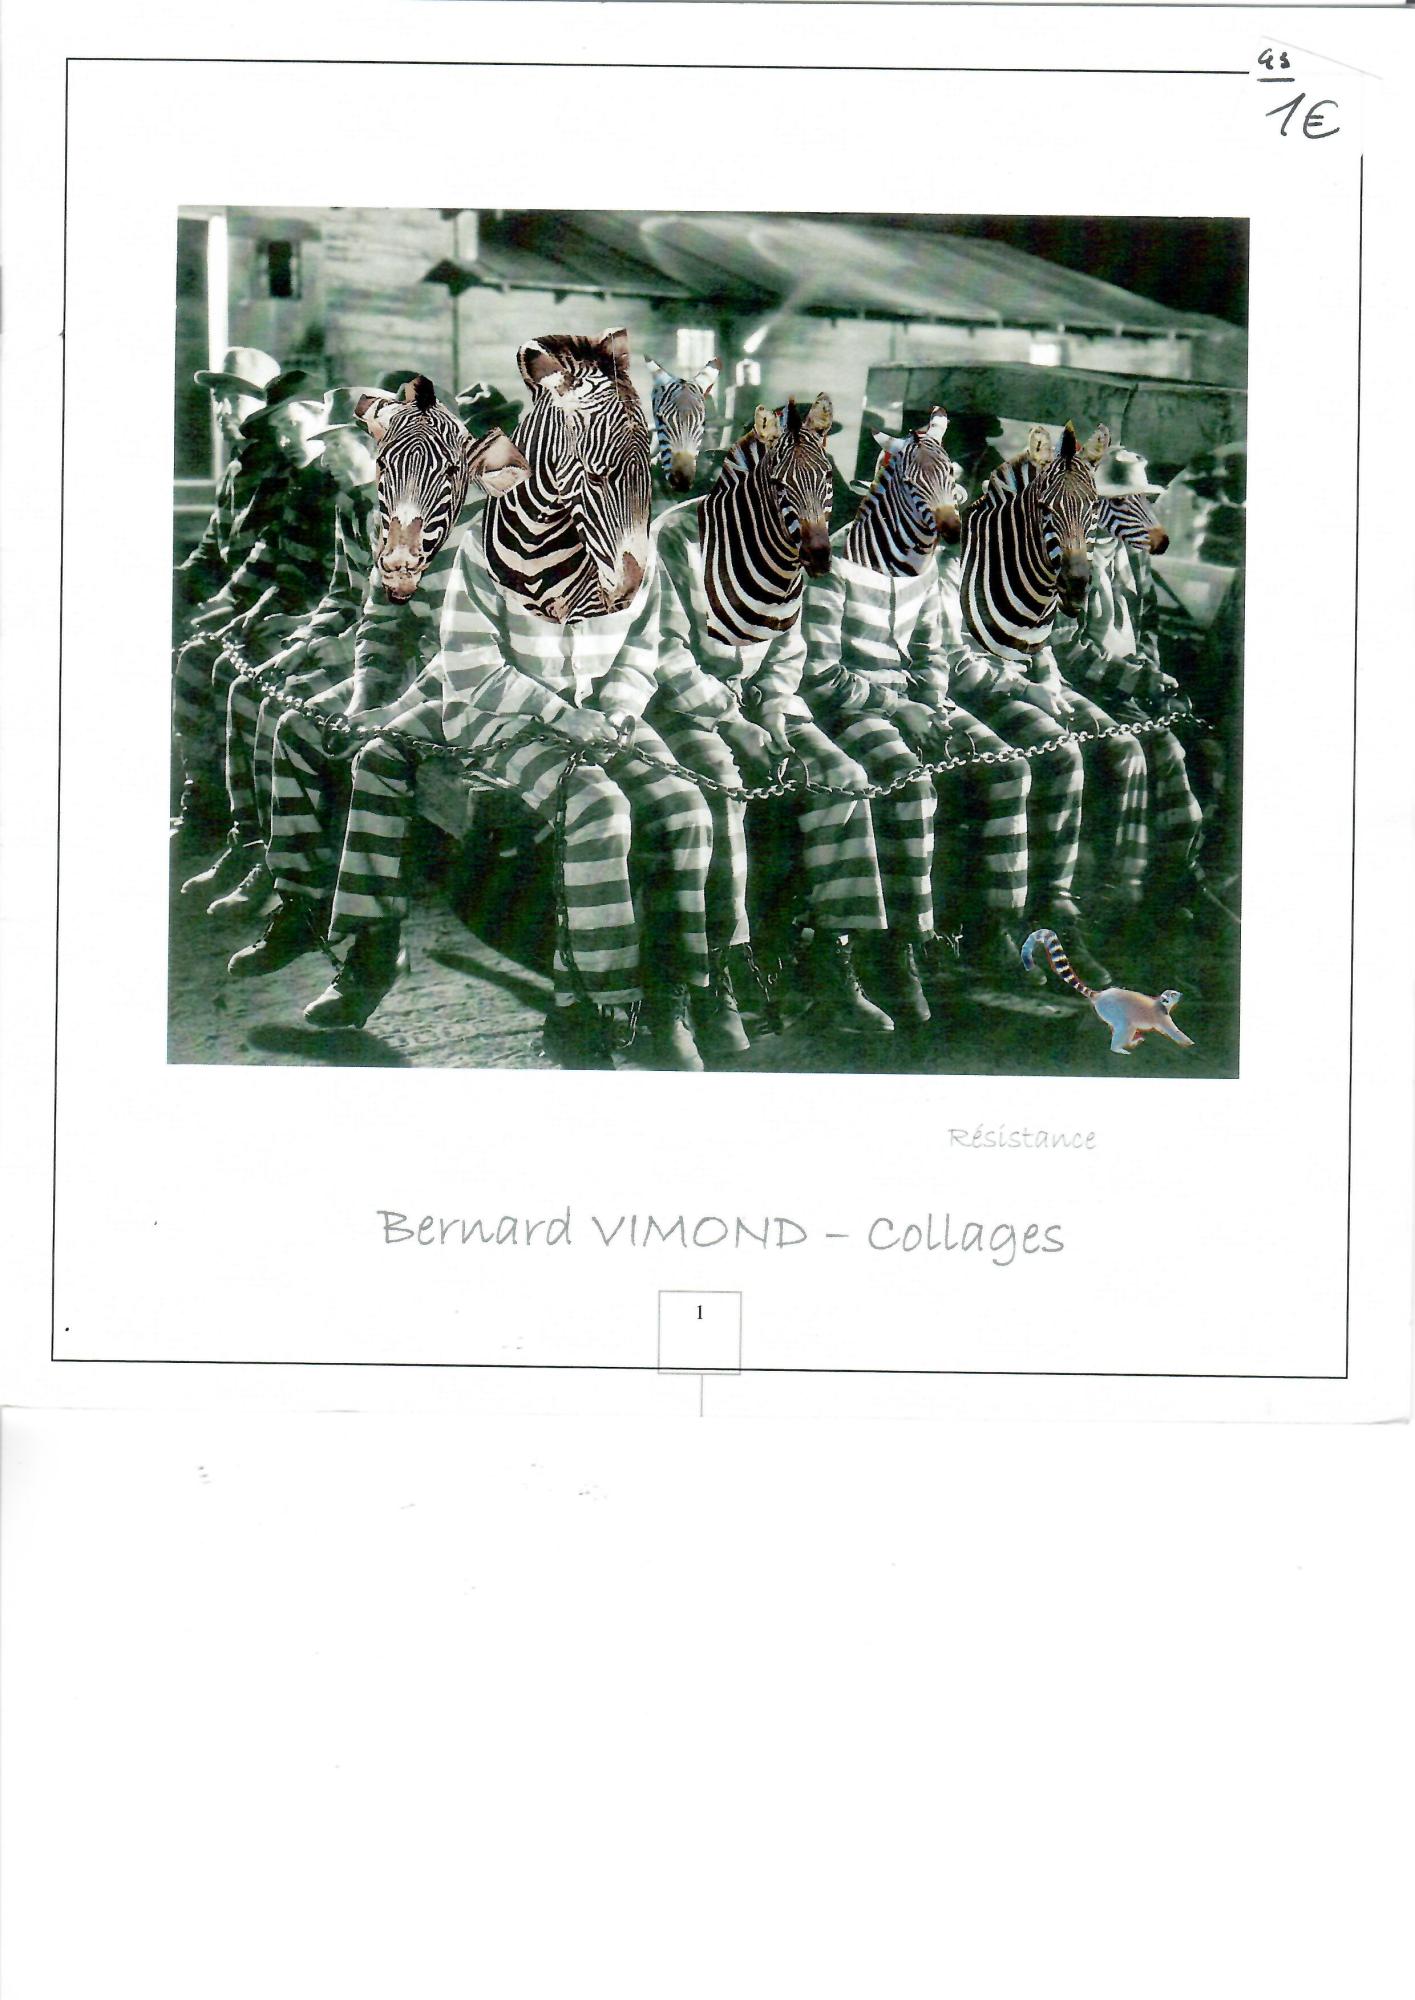 Bernard VIMOND - Collages